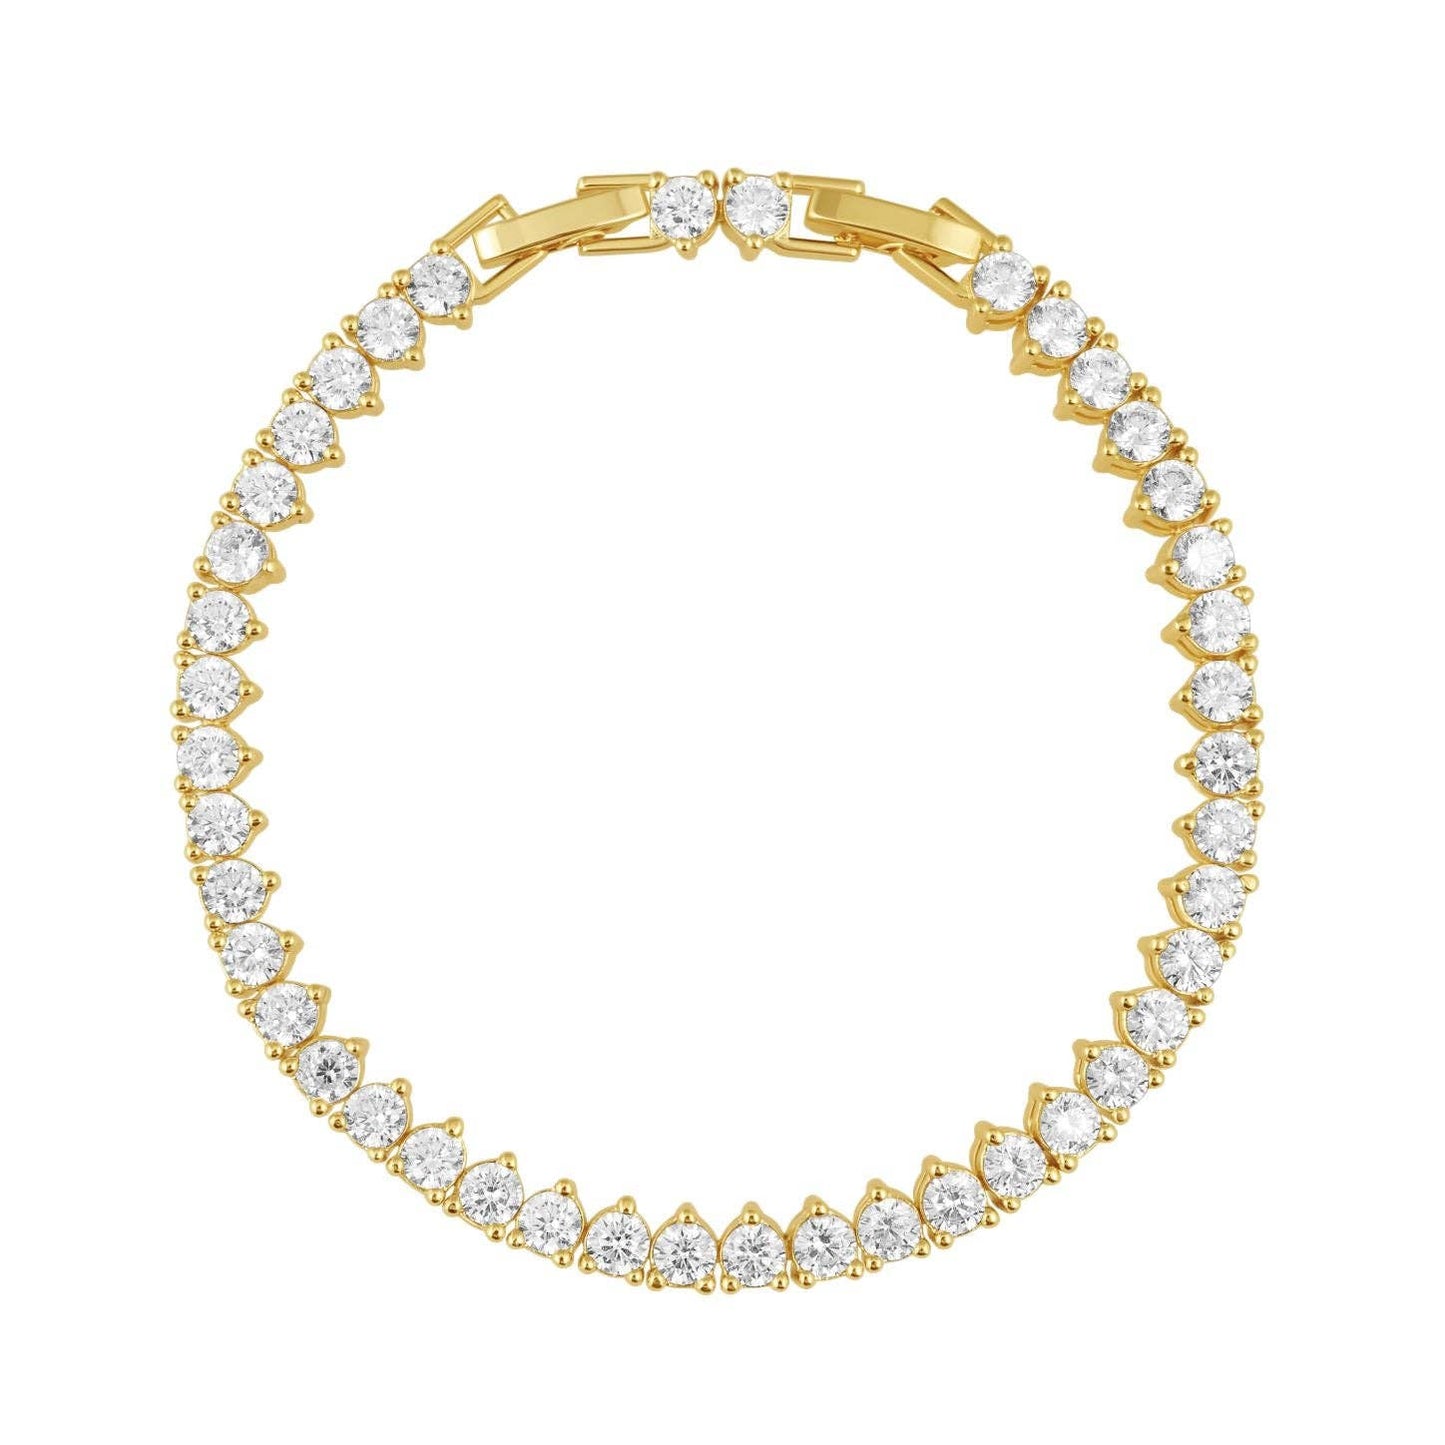 Sahira Jewelry Design - Melinda Tennis Bracelet: 7"